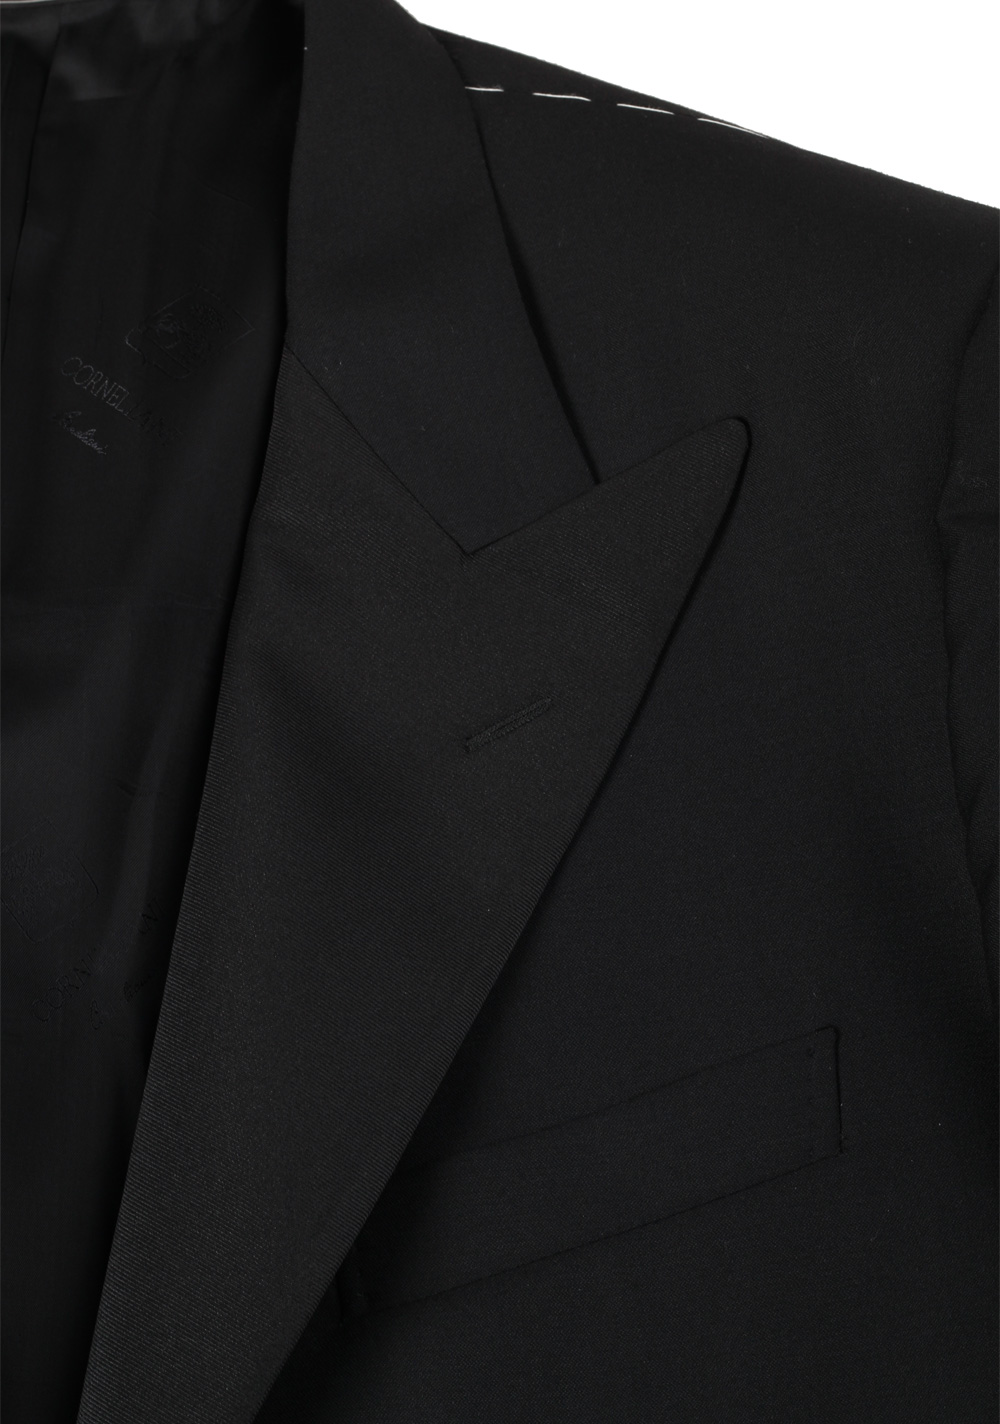 Corneliani Black Tuxedo Sport Coat Size 56L / 46L U.S. Super 140s | Costume Limité